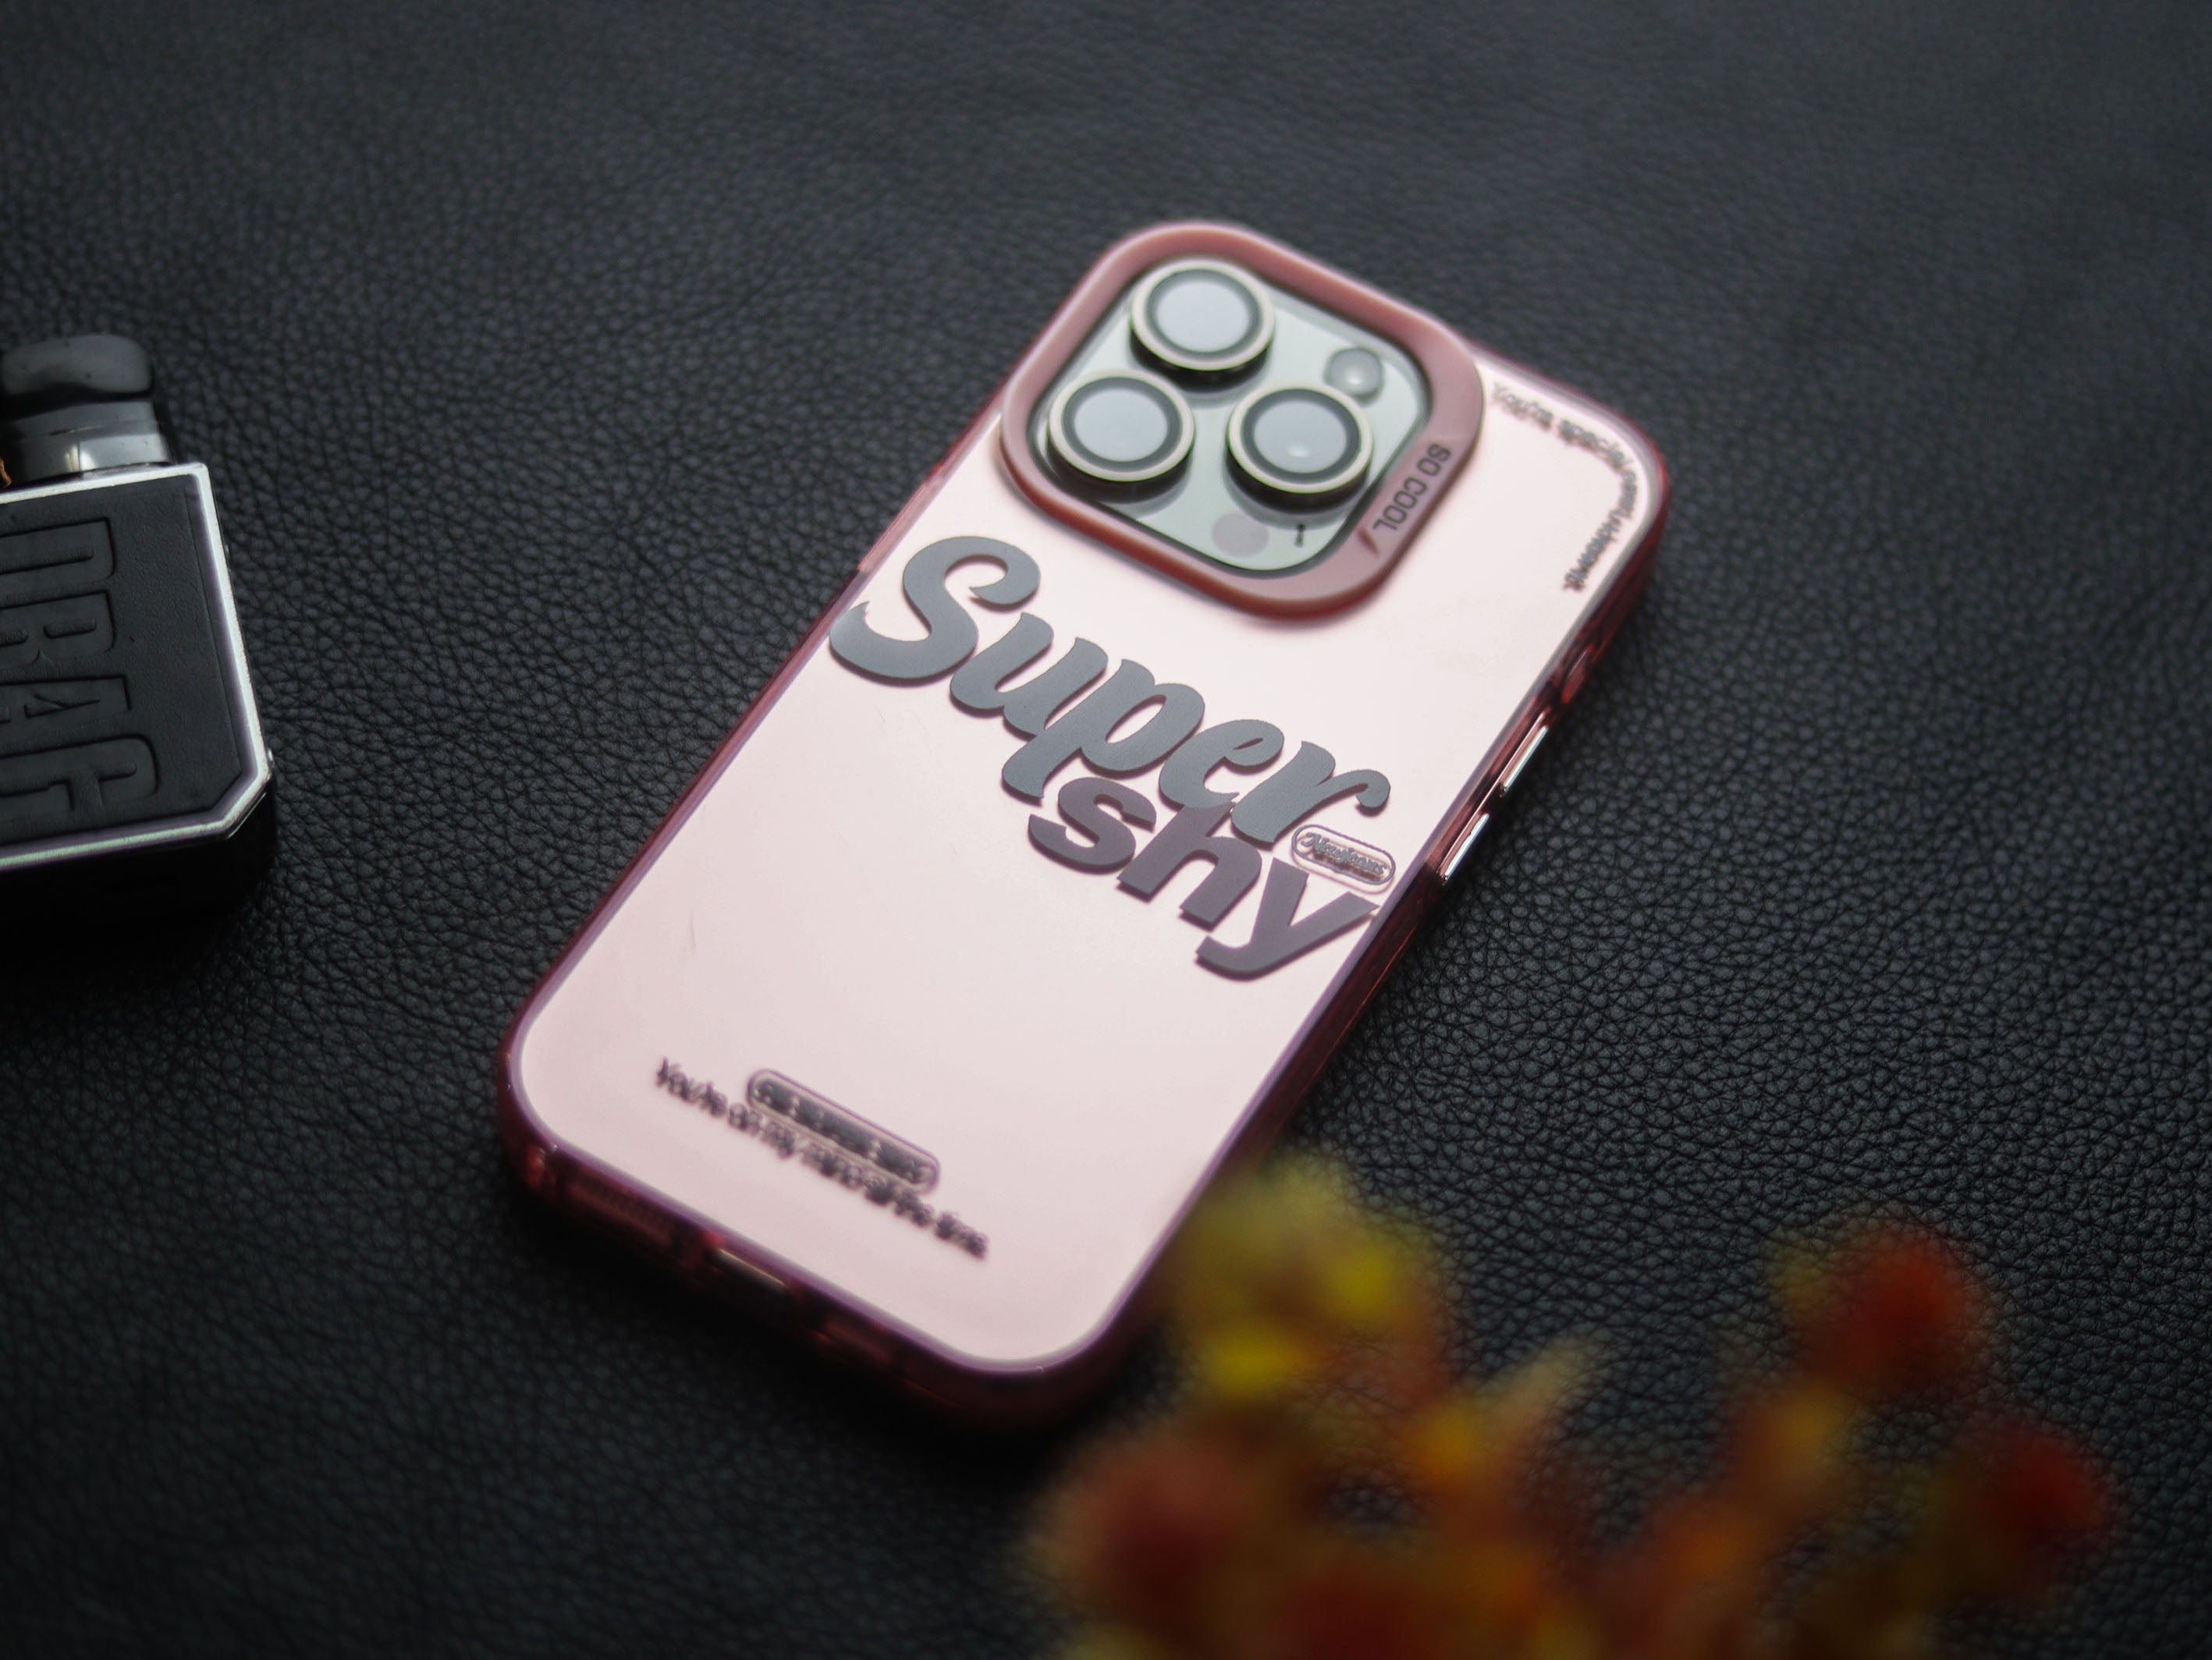 Minimalist Stylish Pink Phone Case-GRIP GADGETS